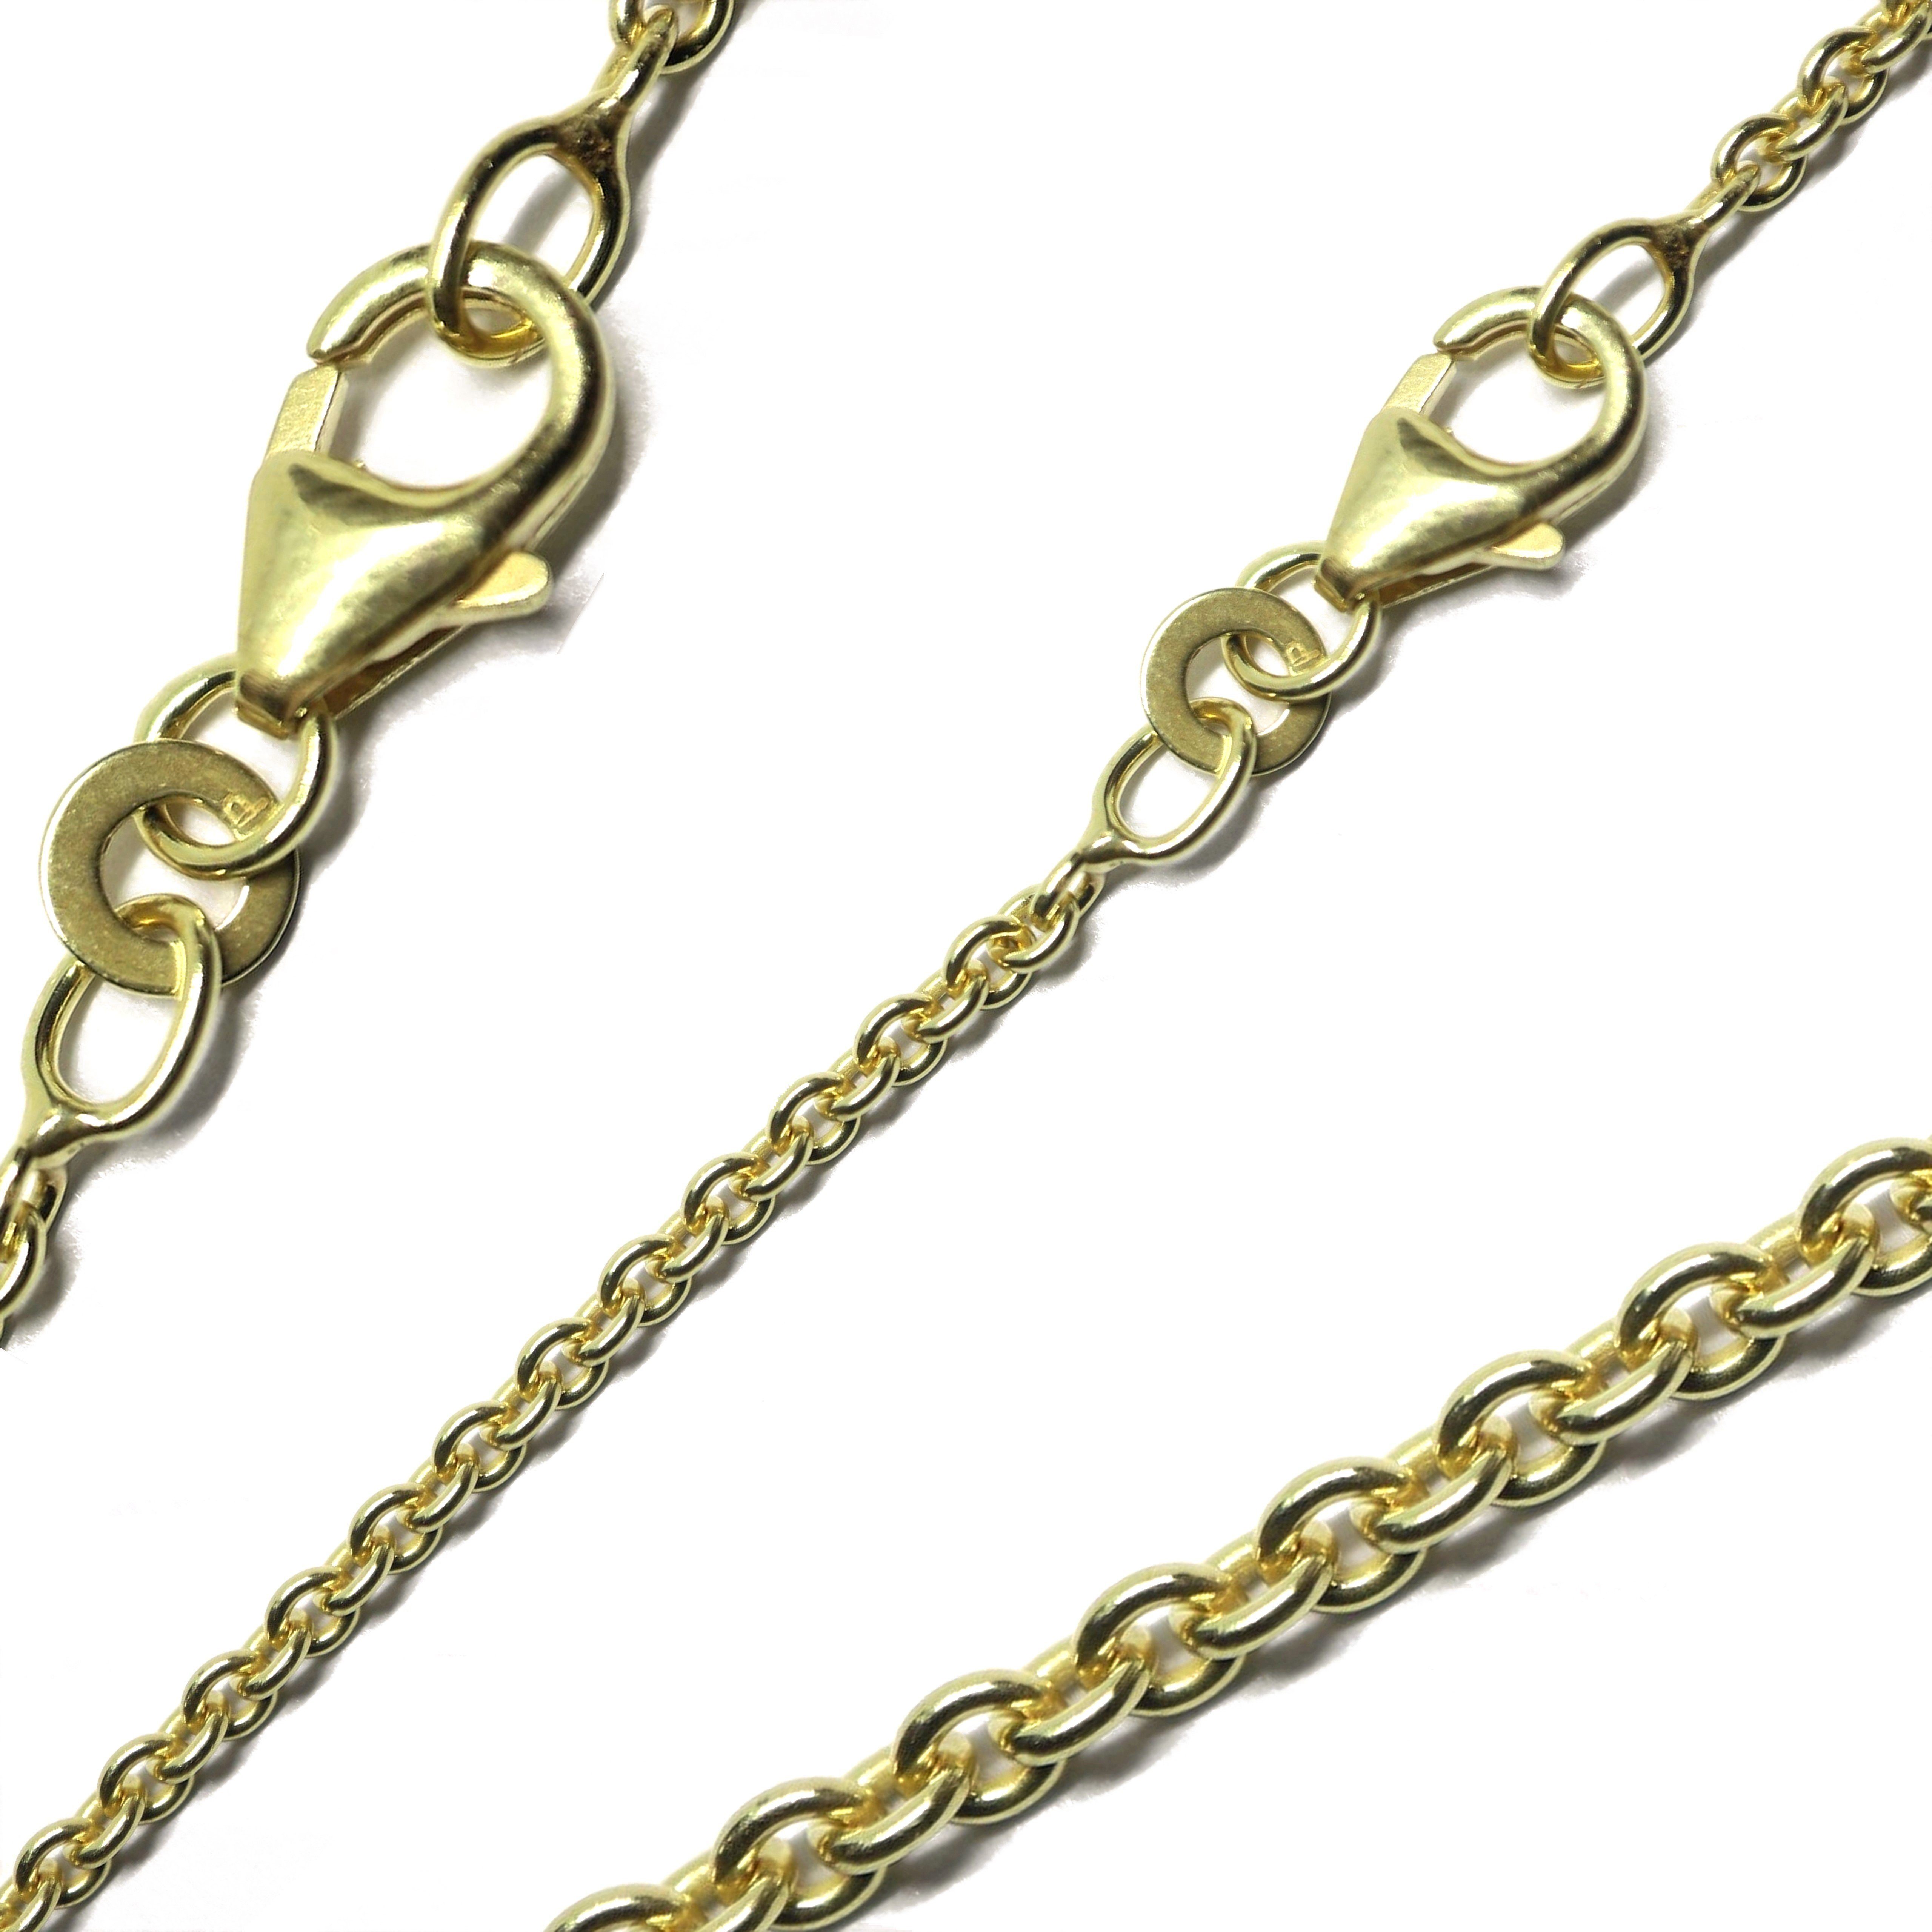 G & J Collier Ankerkette rund 333 8K Gold 2,00mm 42-60cm hochwertige edle Halskette, Made in Germany